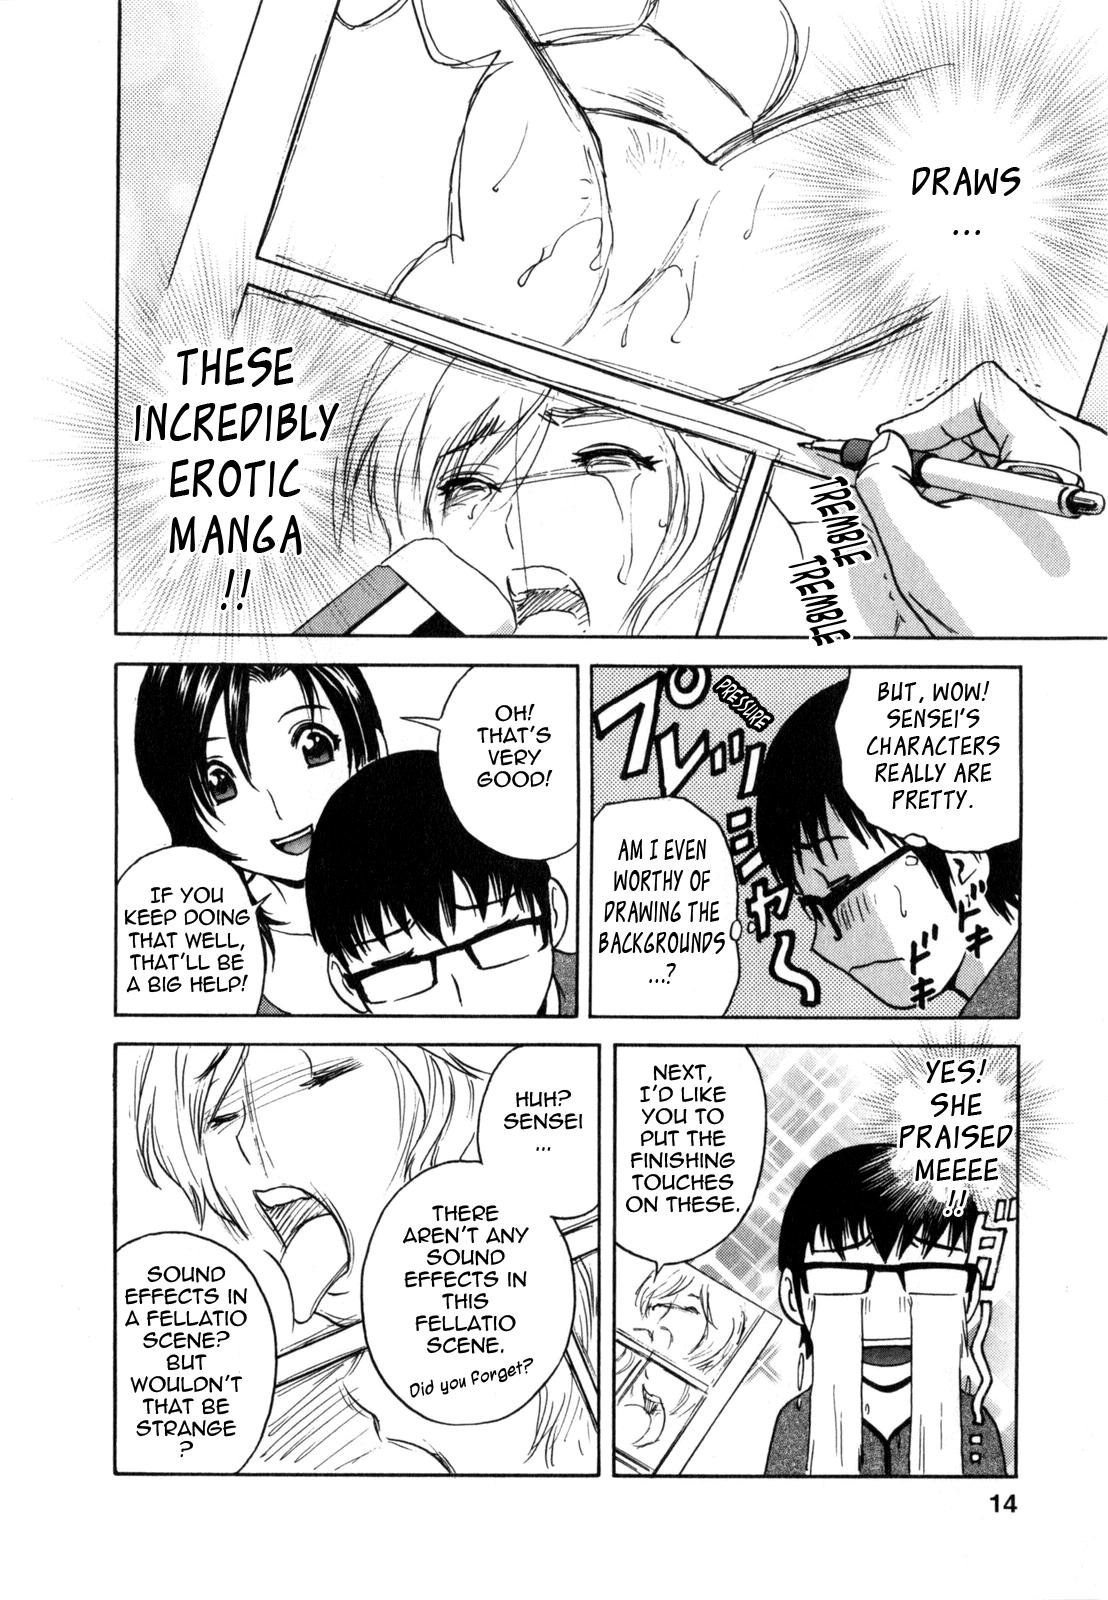 [Hidemaru] Life with Married Women Just Like a Manga 1 - Ch. 1-2 [English] {Tadanohito} 14